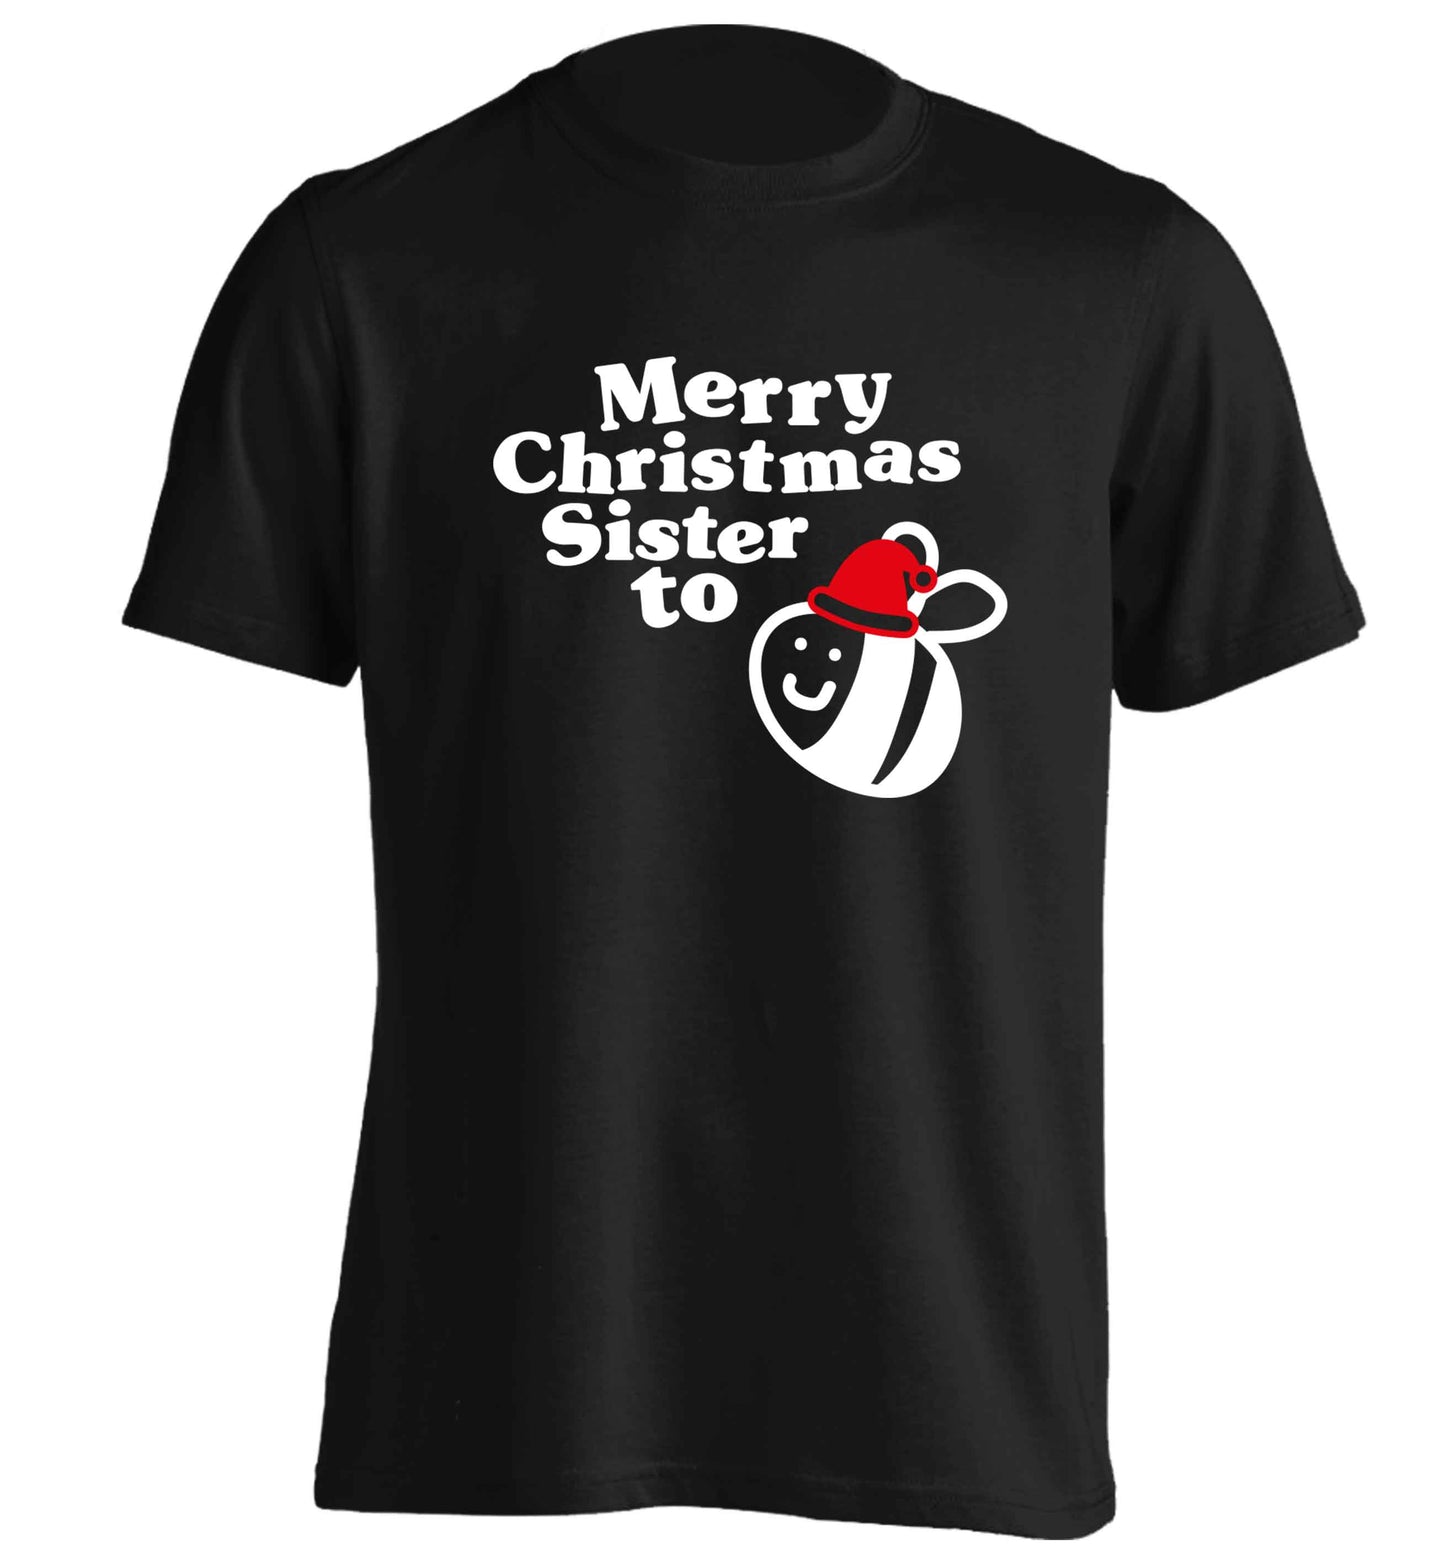 Merry Christmas sister to be adults unisex black Tshirt 2XL